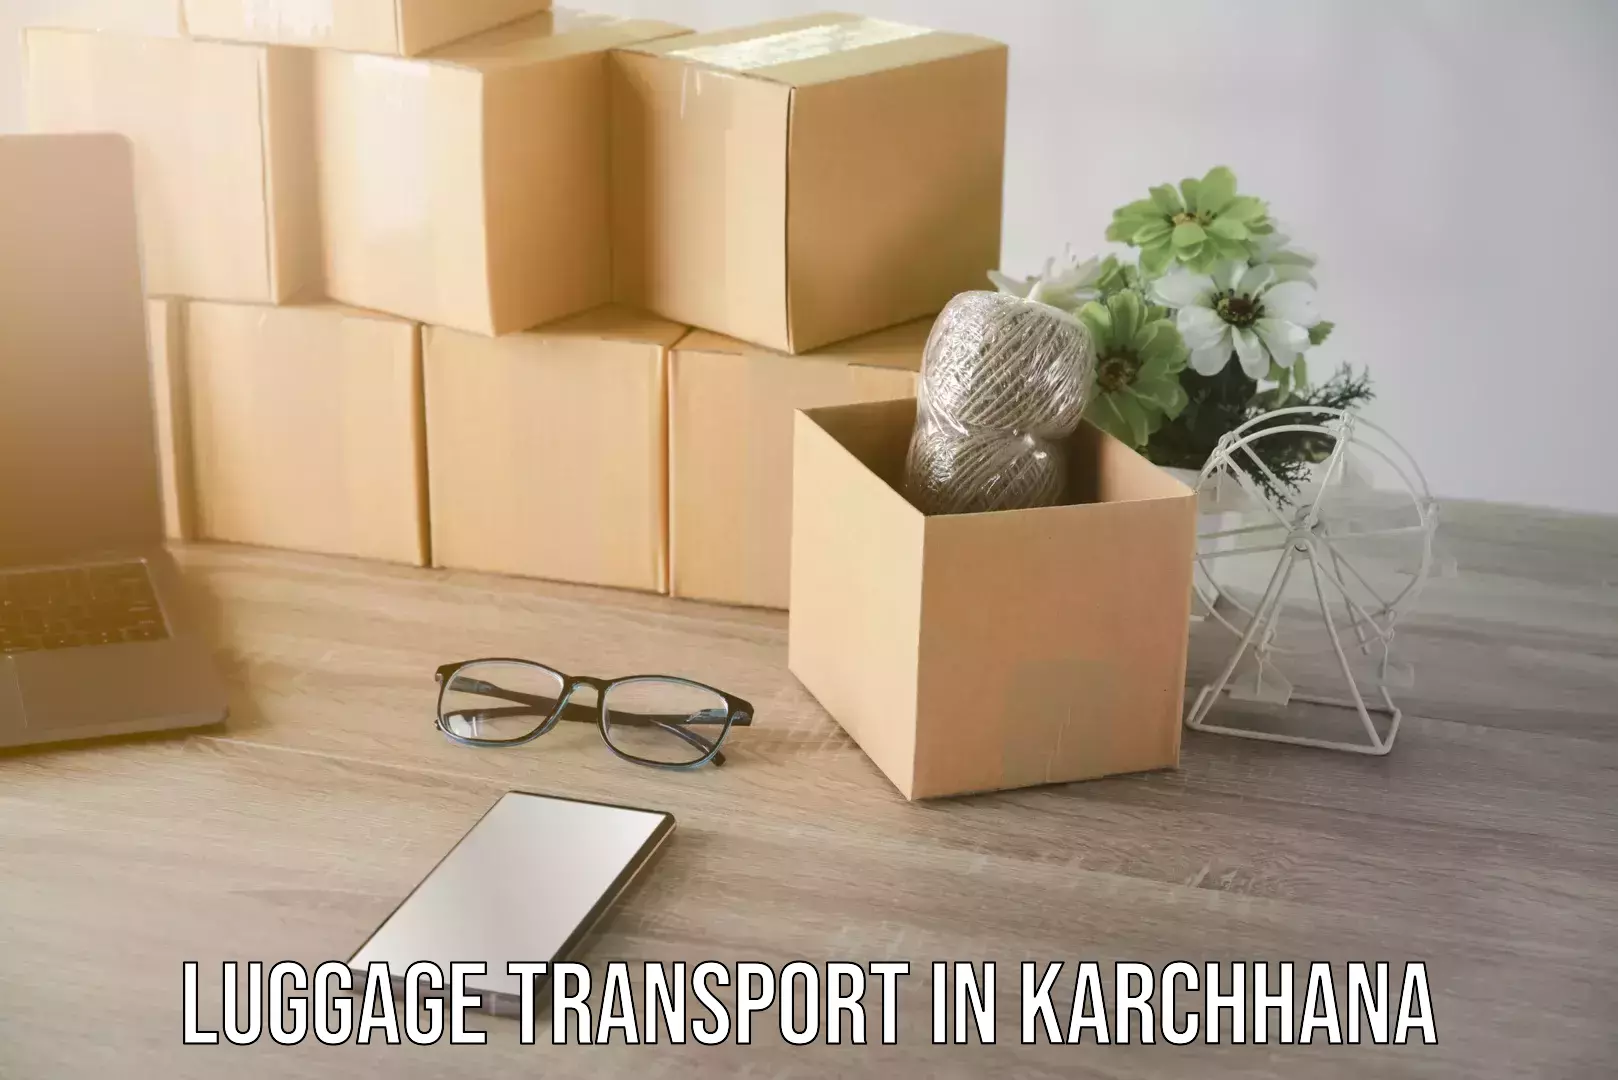 Doorstep luggage pickup in Karchhana